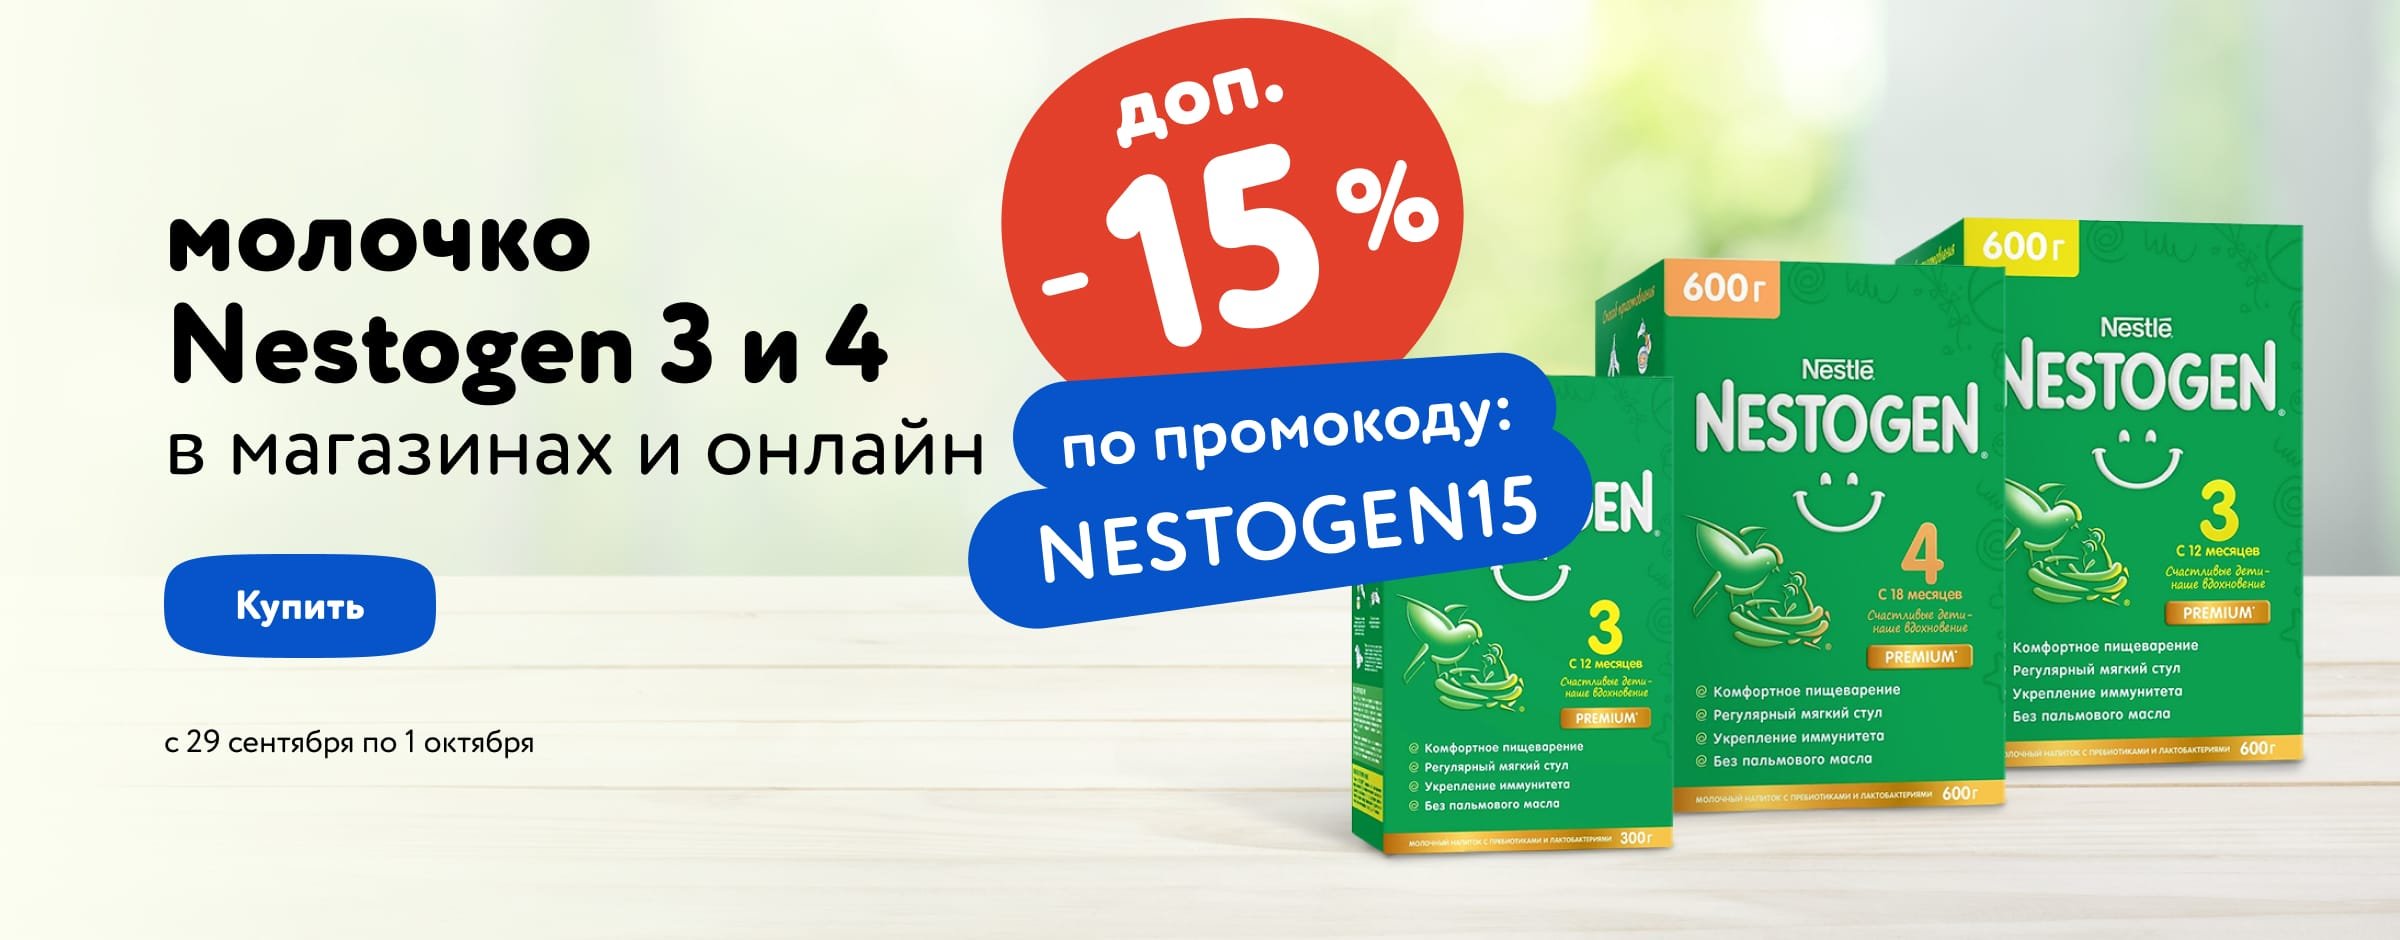 Доп. скидка 15 % по промокоду на молочко Nestogen 3 и 4